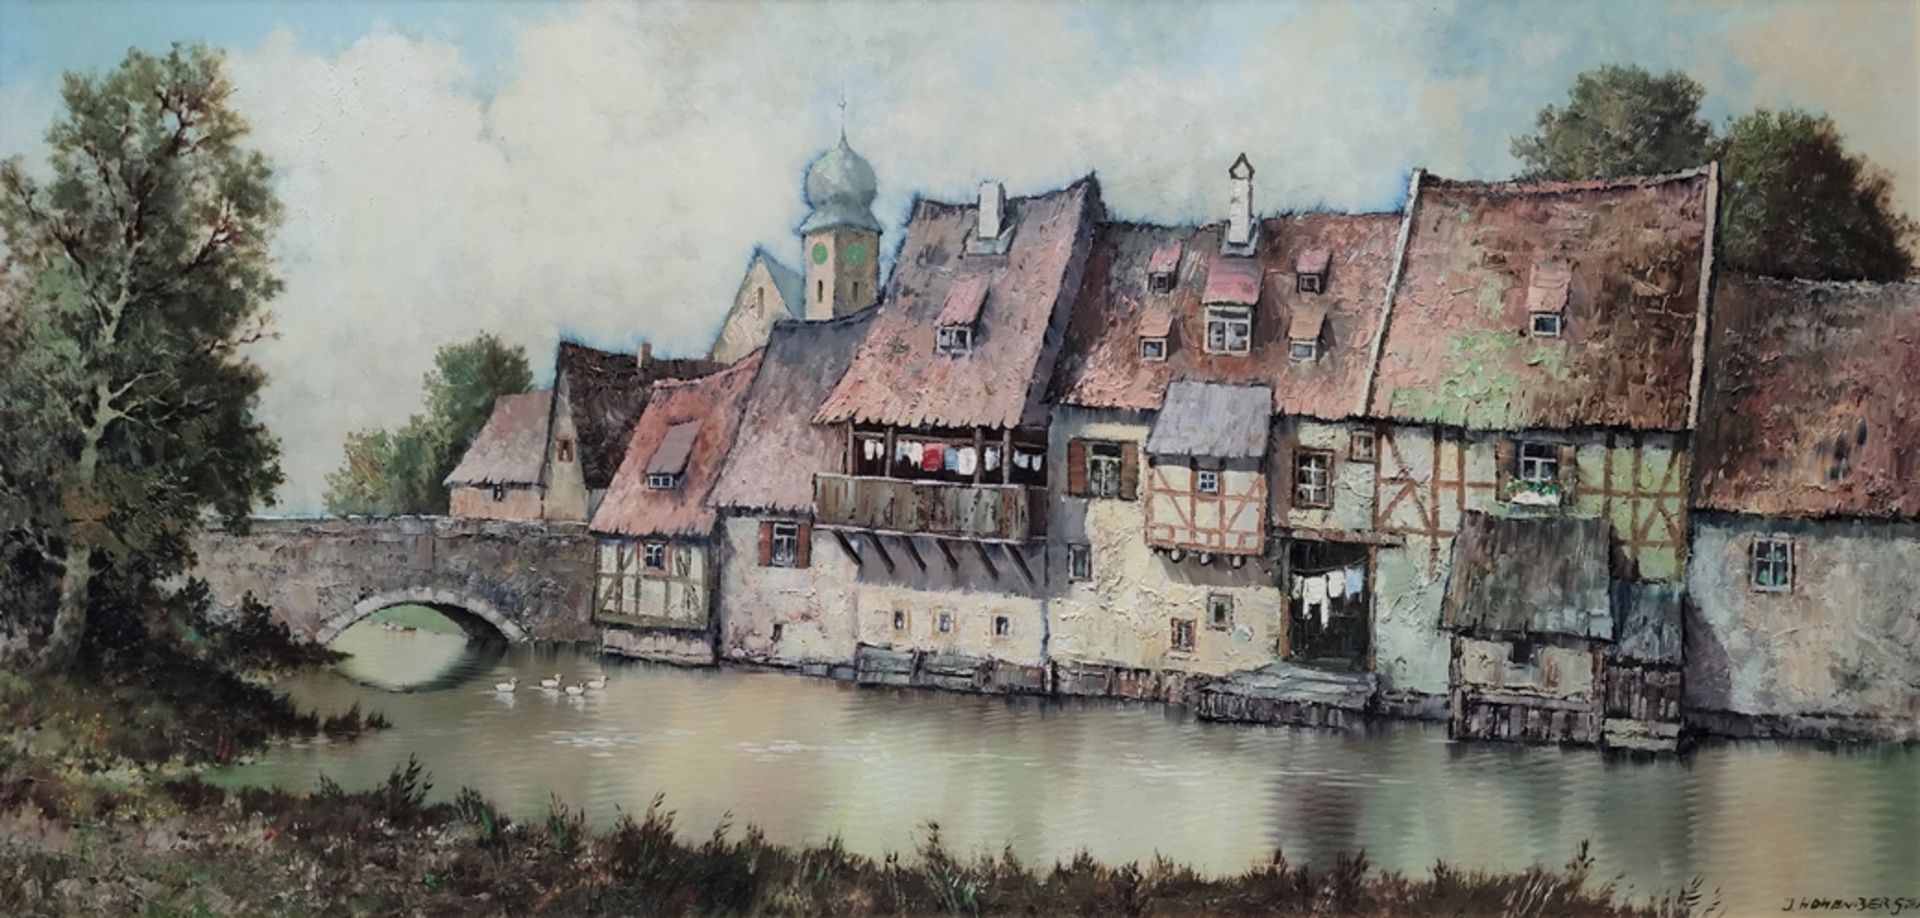 Hohenberger, J. (1911-?) "Dorfansicht am Fluss" with medieval bridge, oil on canvas, signed lower r